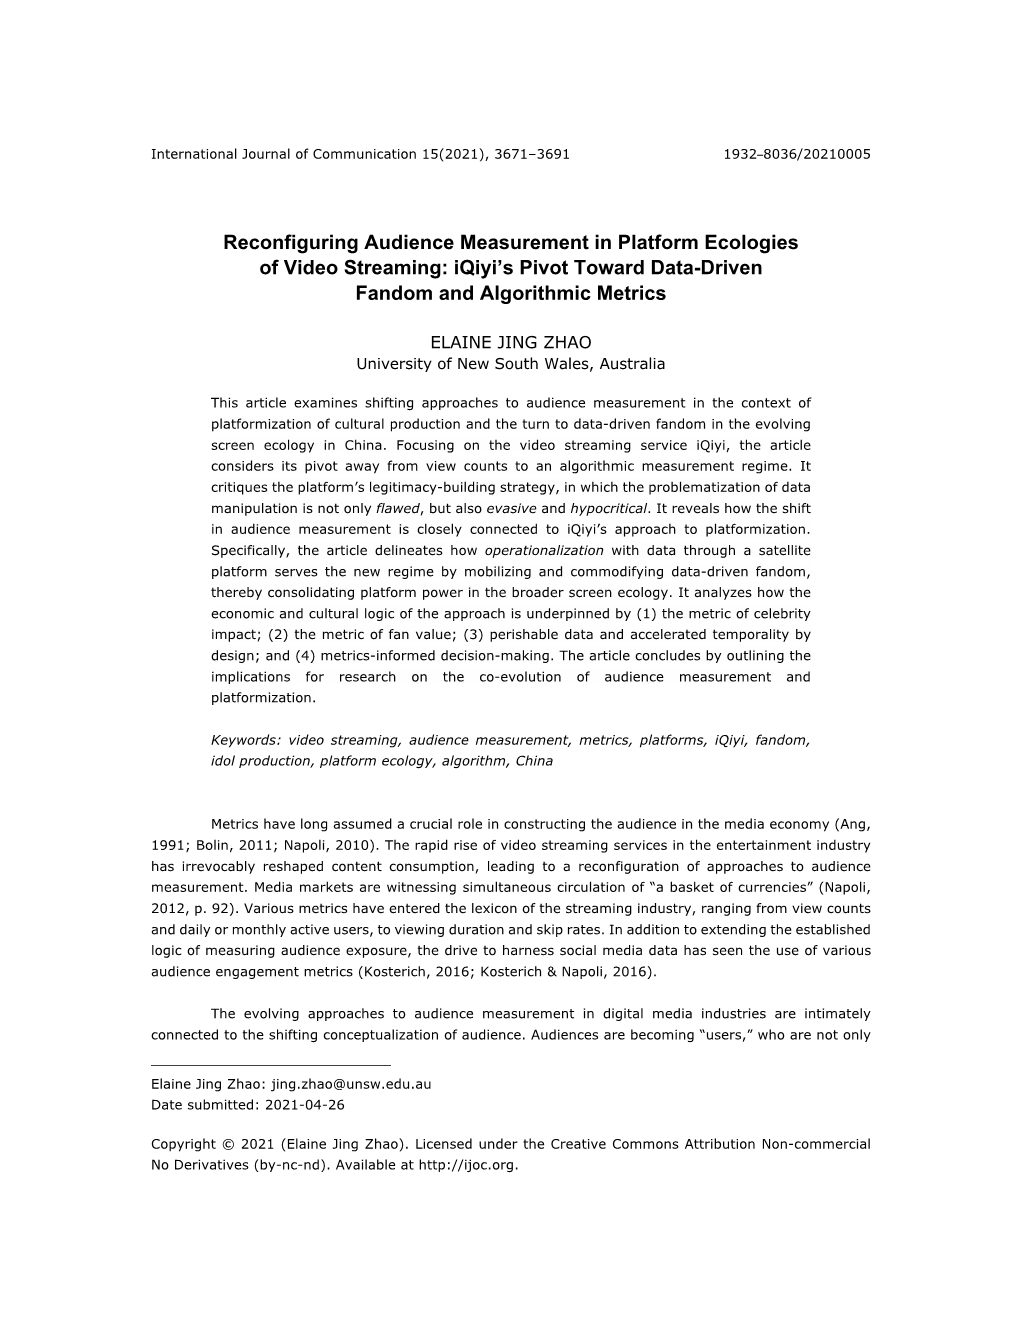 Reconfiguring Audience Measurement in Platform Ecologies of Video Streaming: Iqiyi’S Pivot Toward Data-Driven Fandom and Algorithmic Metrics